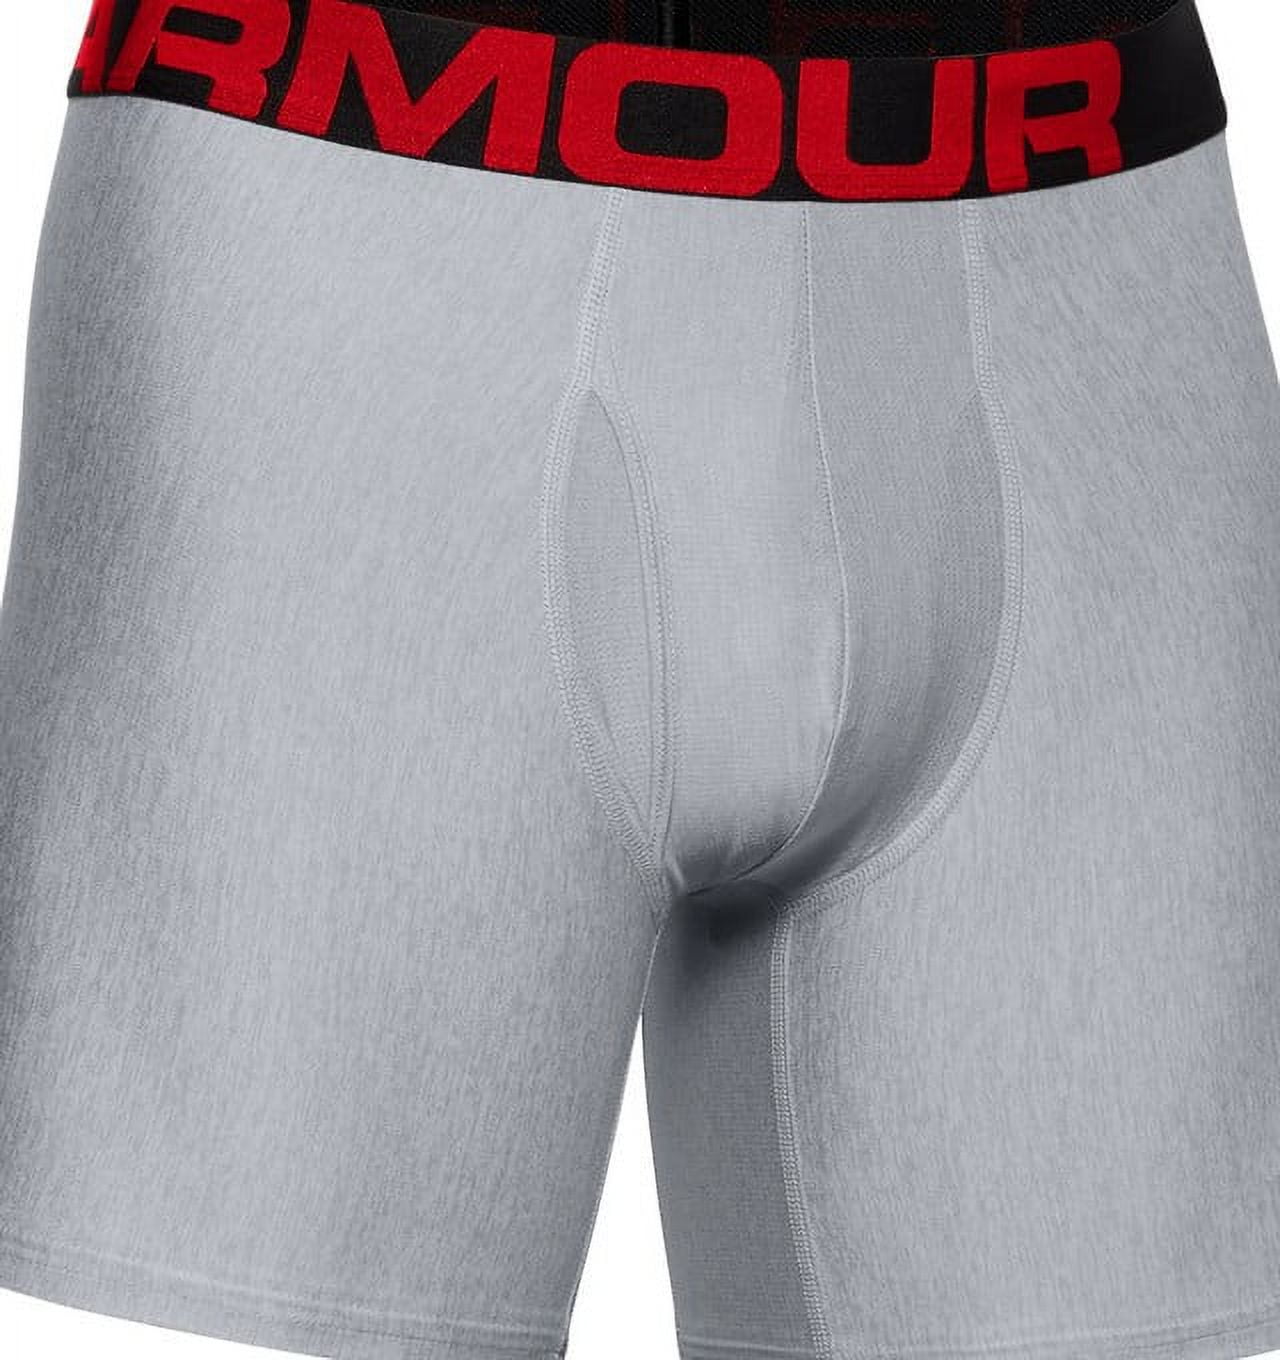 Under Armour Men's Boxer Brief 2 Pack UA Tech 6 Boxerjock Underwear  1363619, Grey, 2XL